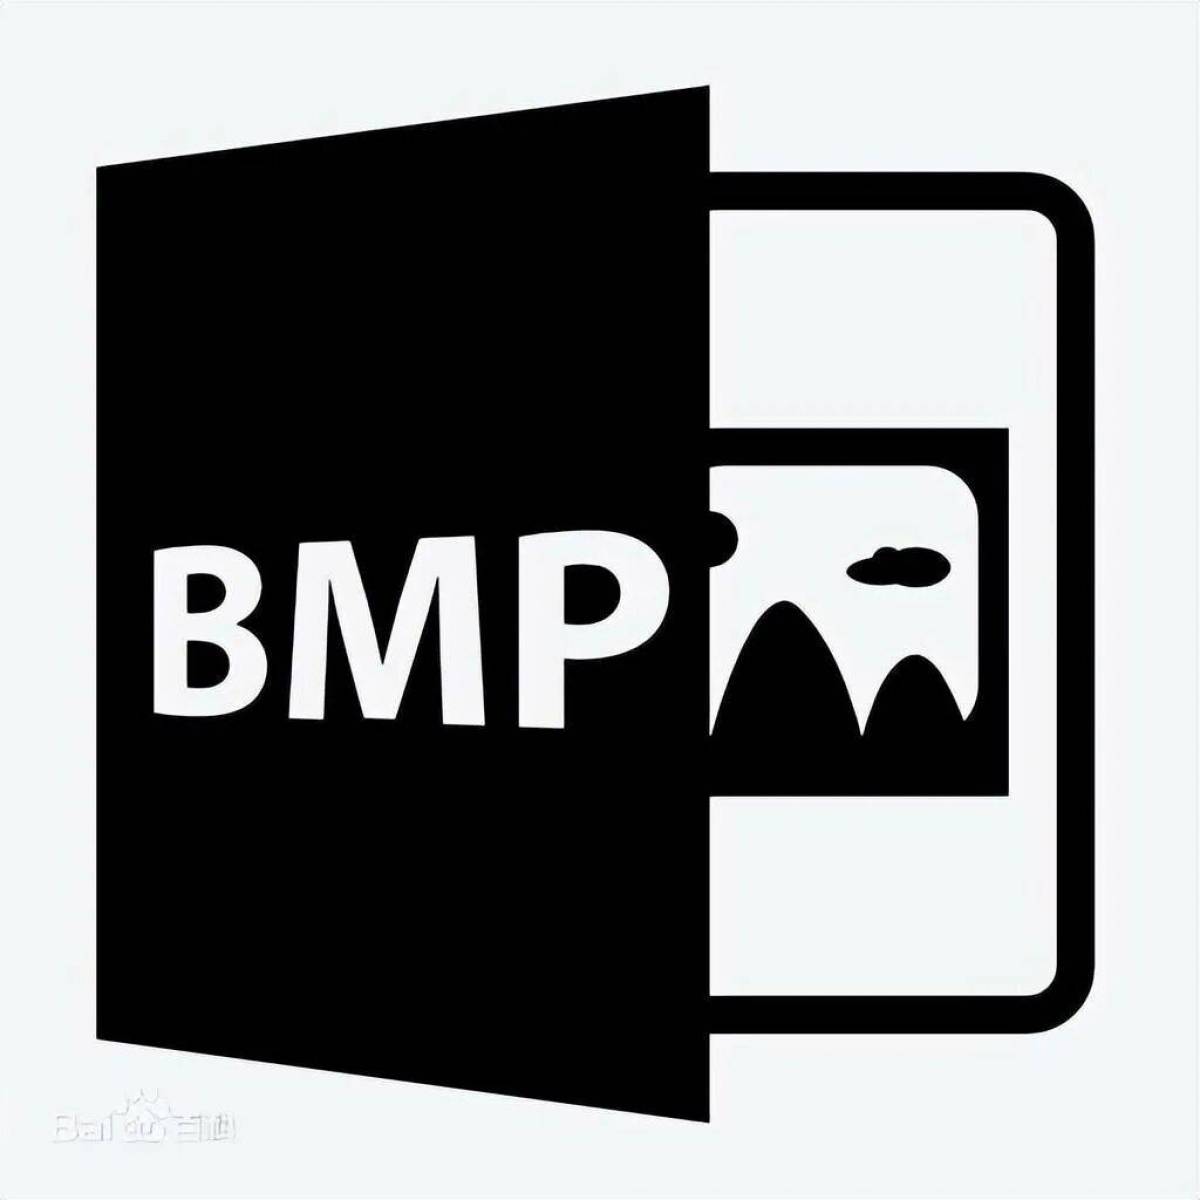 Формат bmp в jpg. Bmp Формат. Bmp (Формат файлов). Файлы с расширением bmp. Изображения в формате bmp.